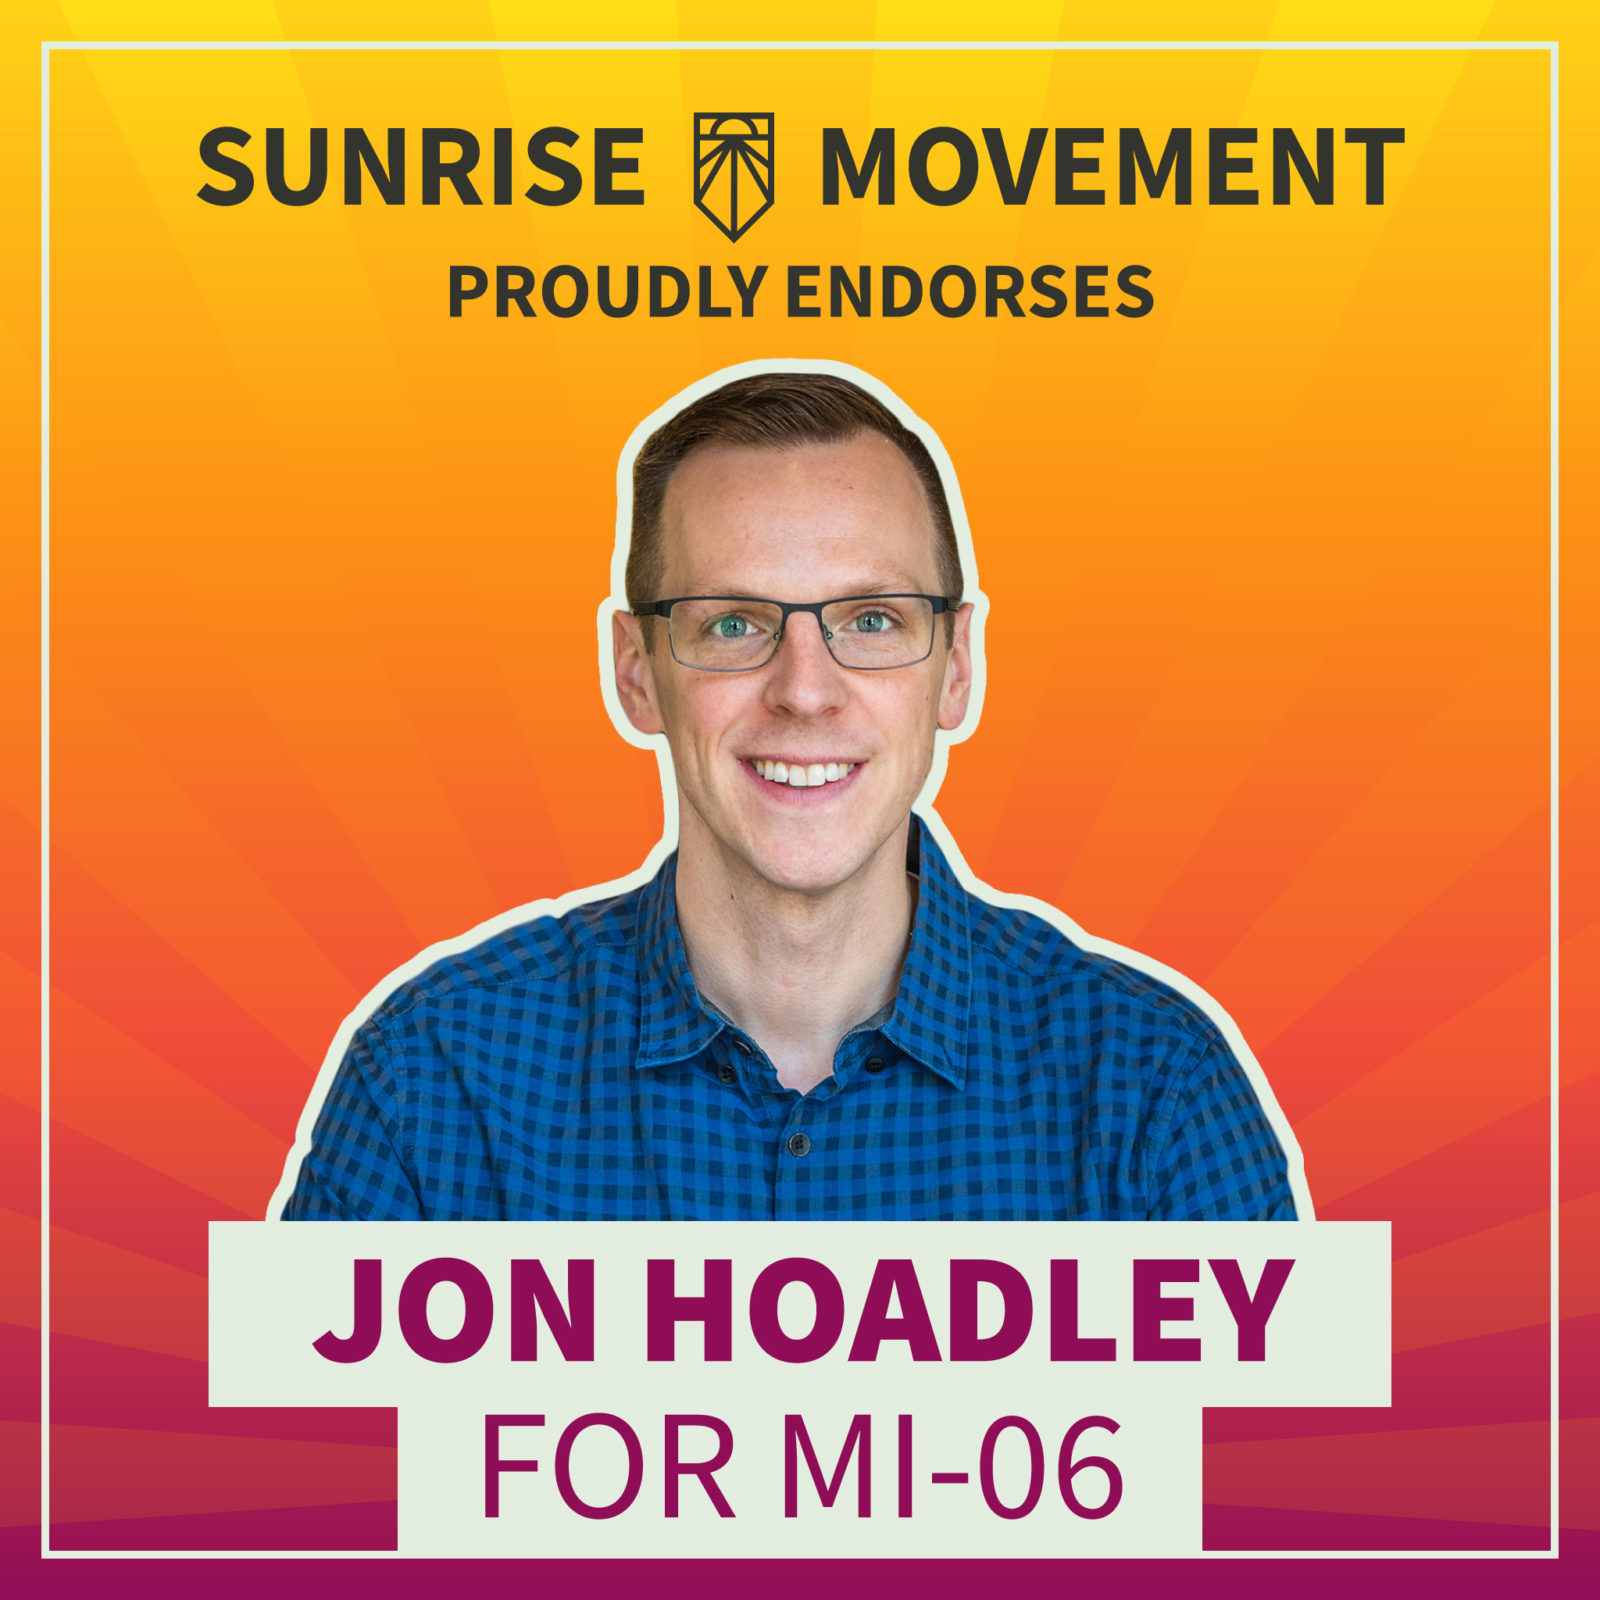 A photo of Jon Hoadley with text: Sunrise Movement proudly endorses Jon Hoadley for MI-06.